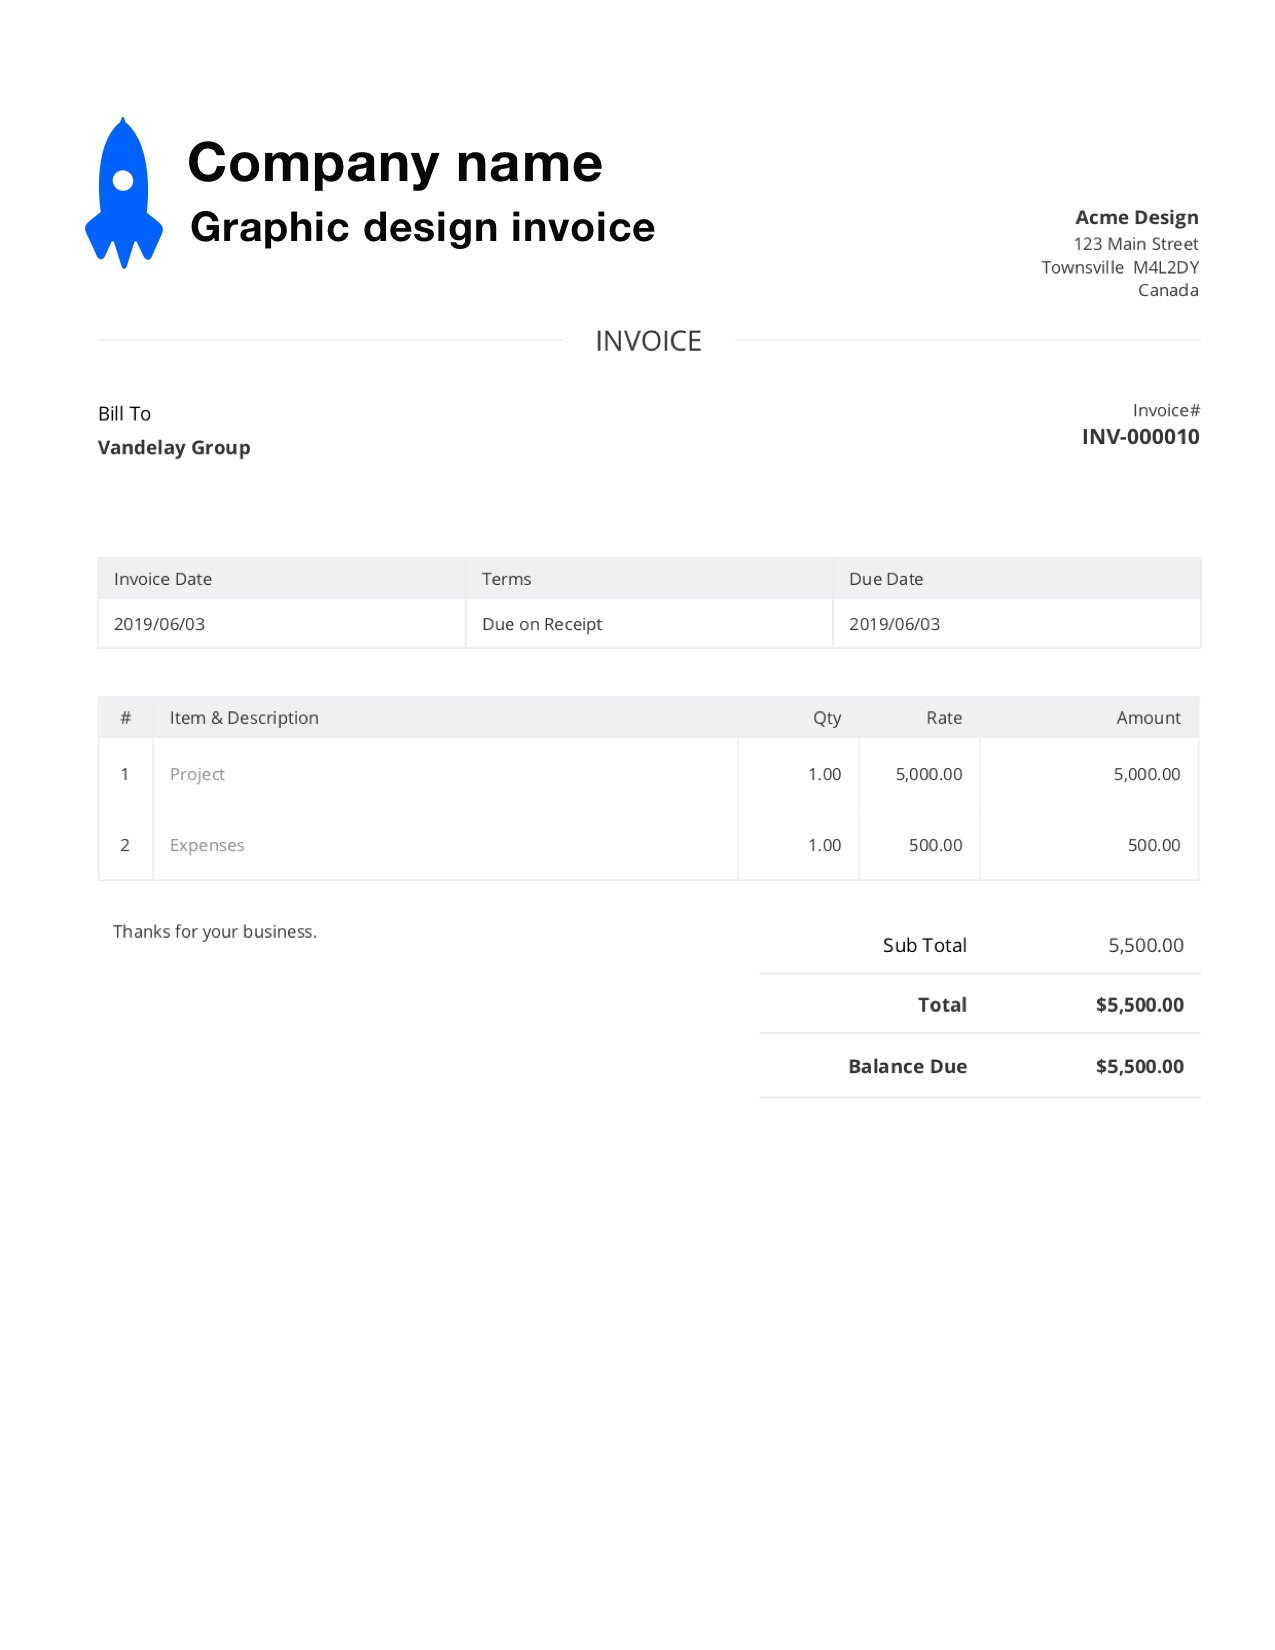 Graphic Design Invoice Template. Customize and Send in 21 Seconds Inside Graphic Design Invoice Template Pdf